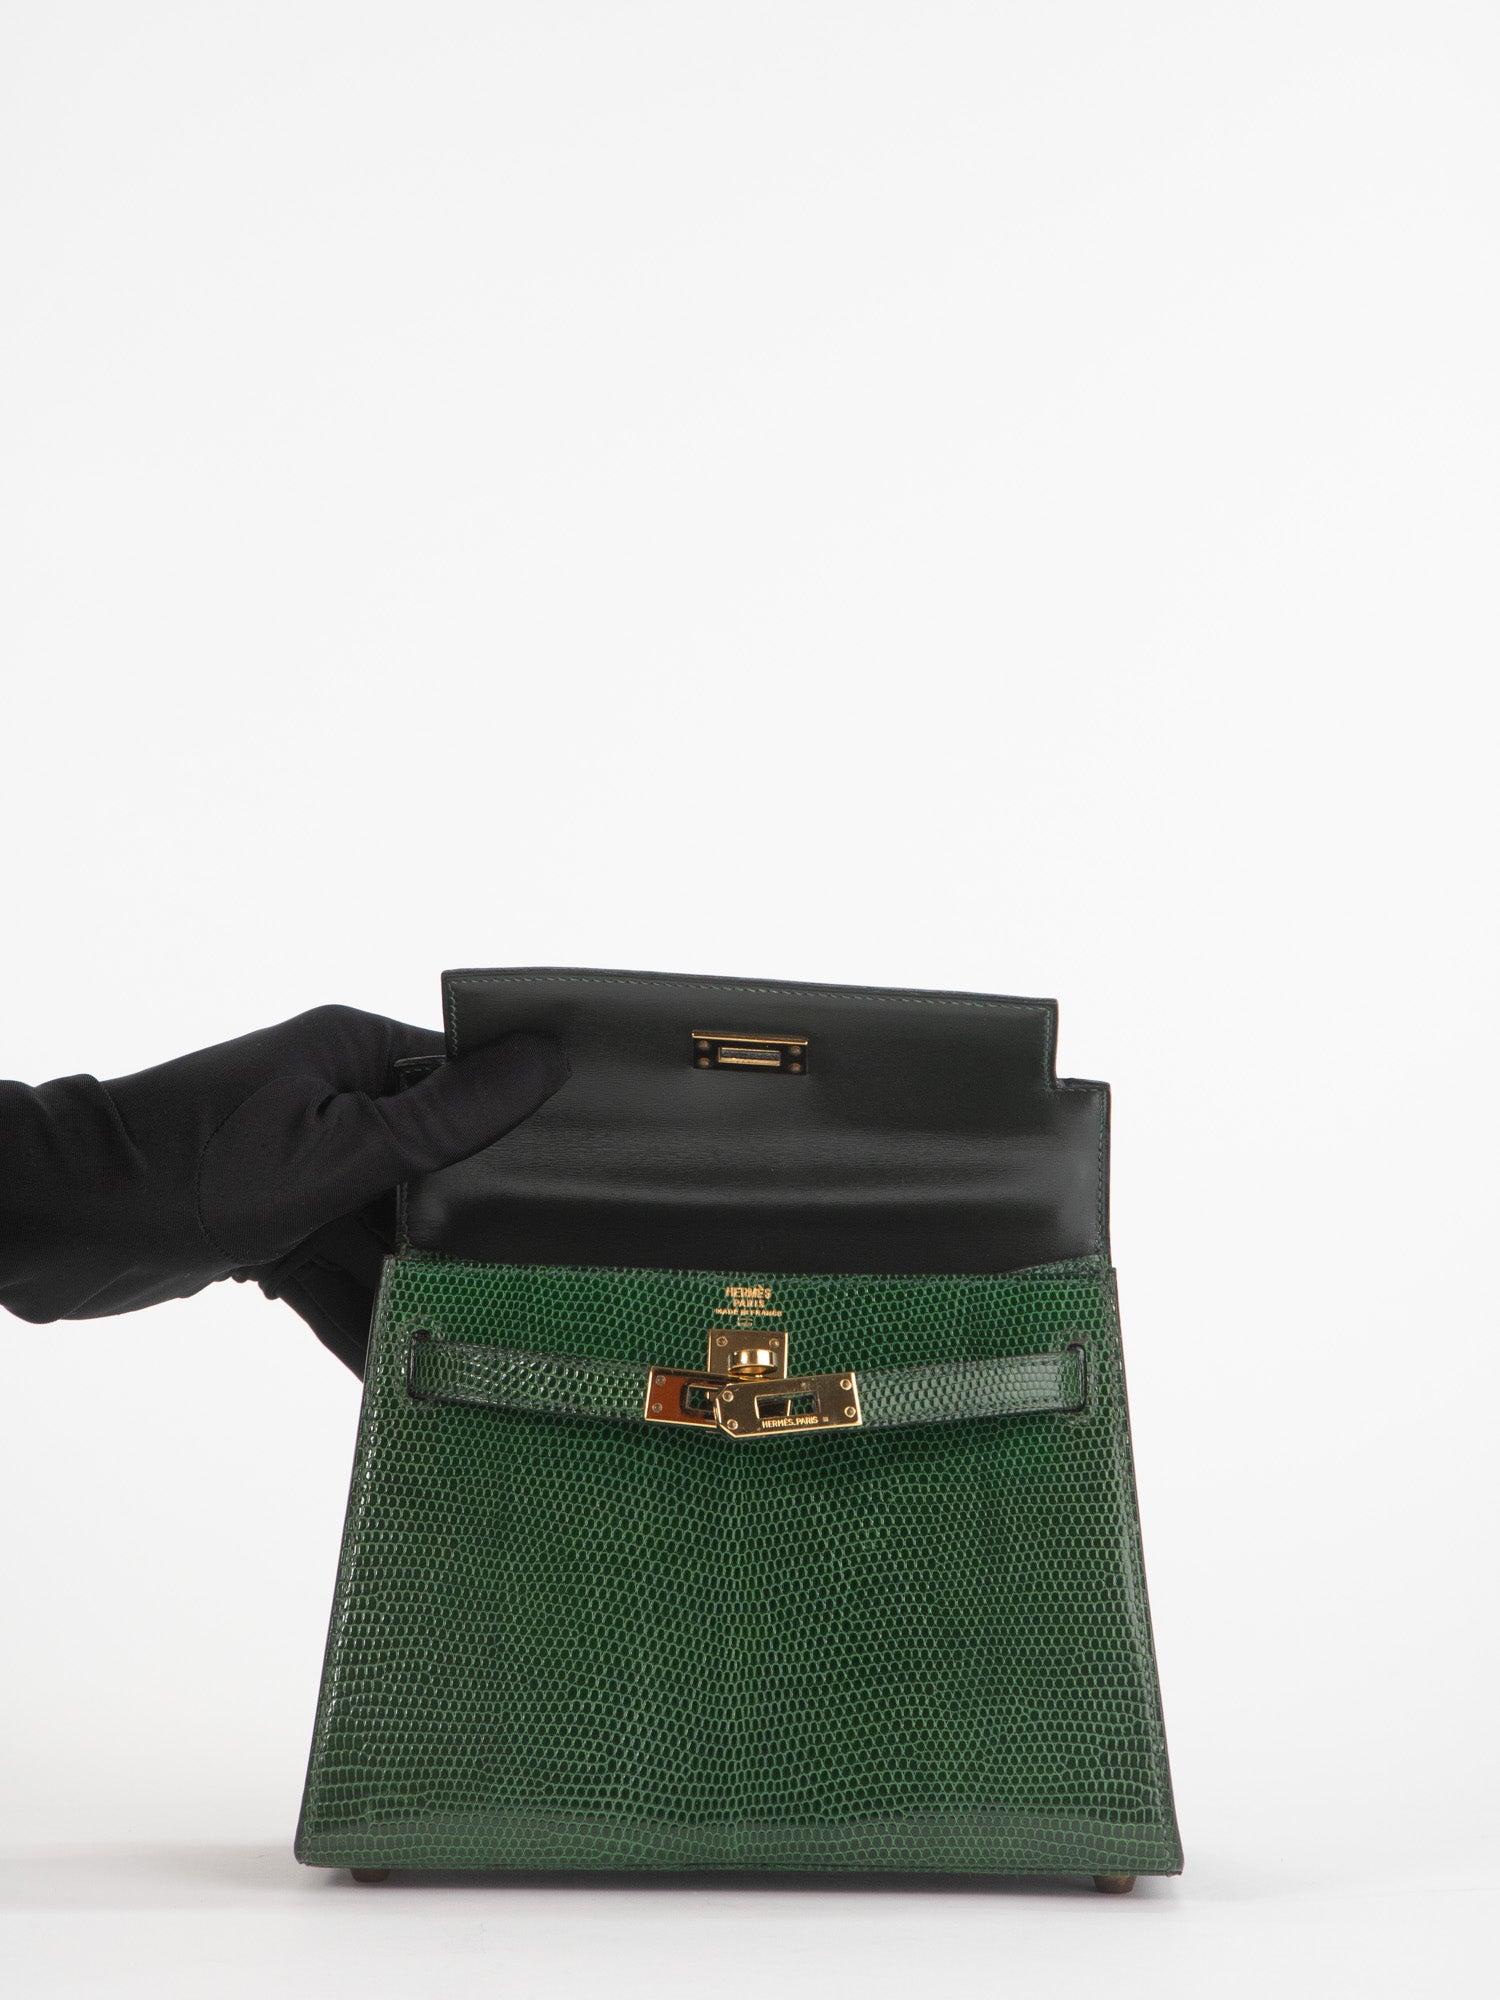 Exceptional Rarest Hermès Mini Micro Kelly Bag Lizard Gold Hw 15 cm